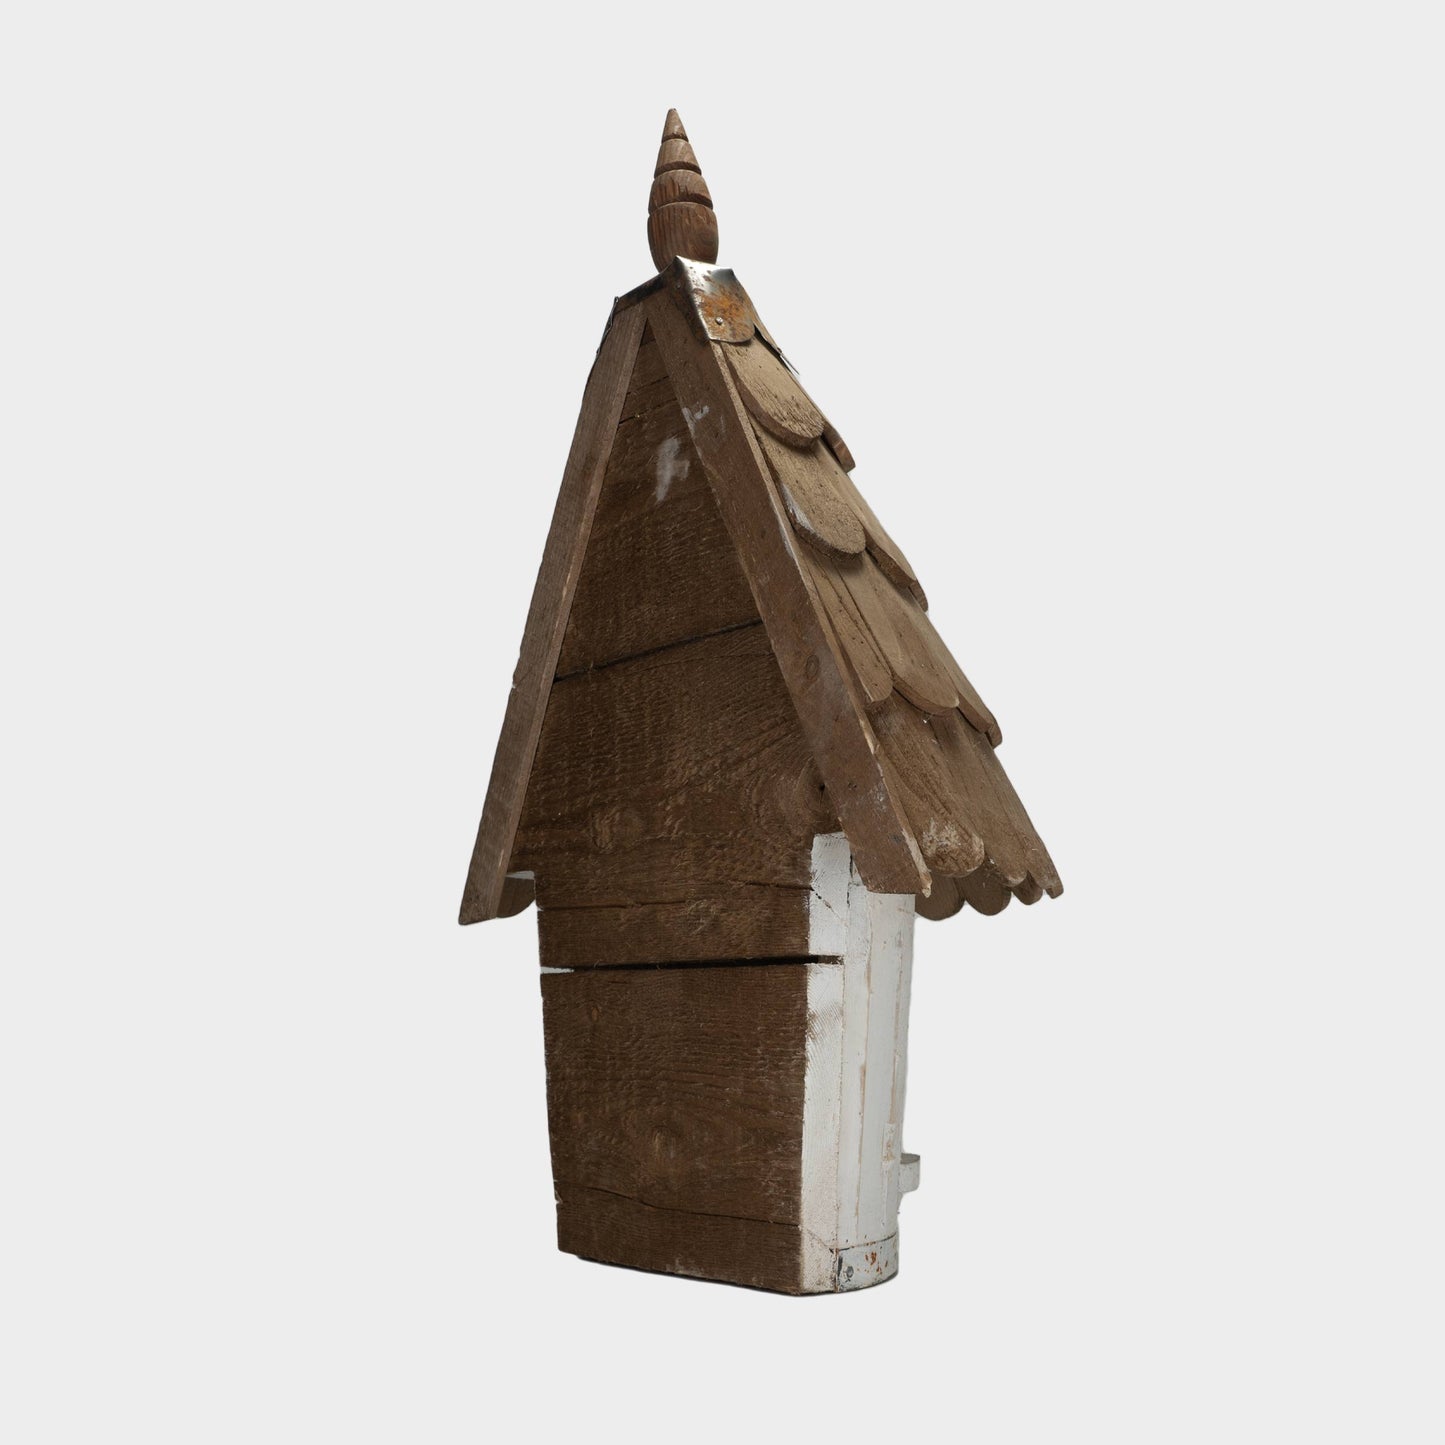 English Half Round Handmade Birdhouse in Reclaimed Pine